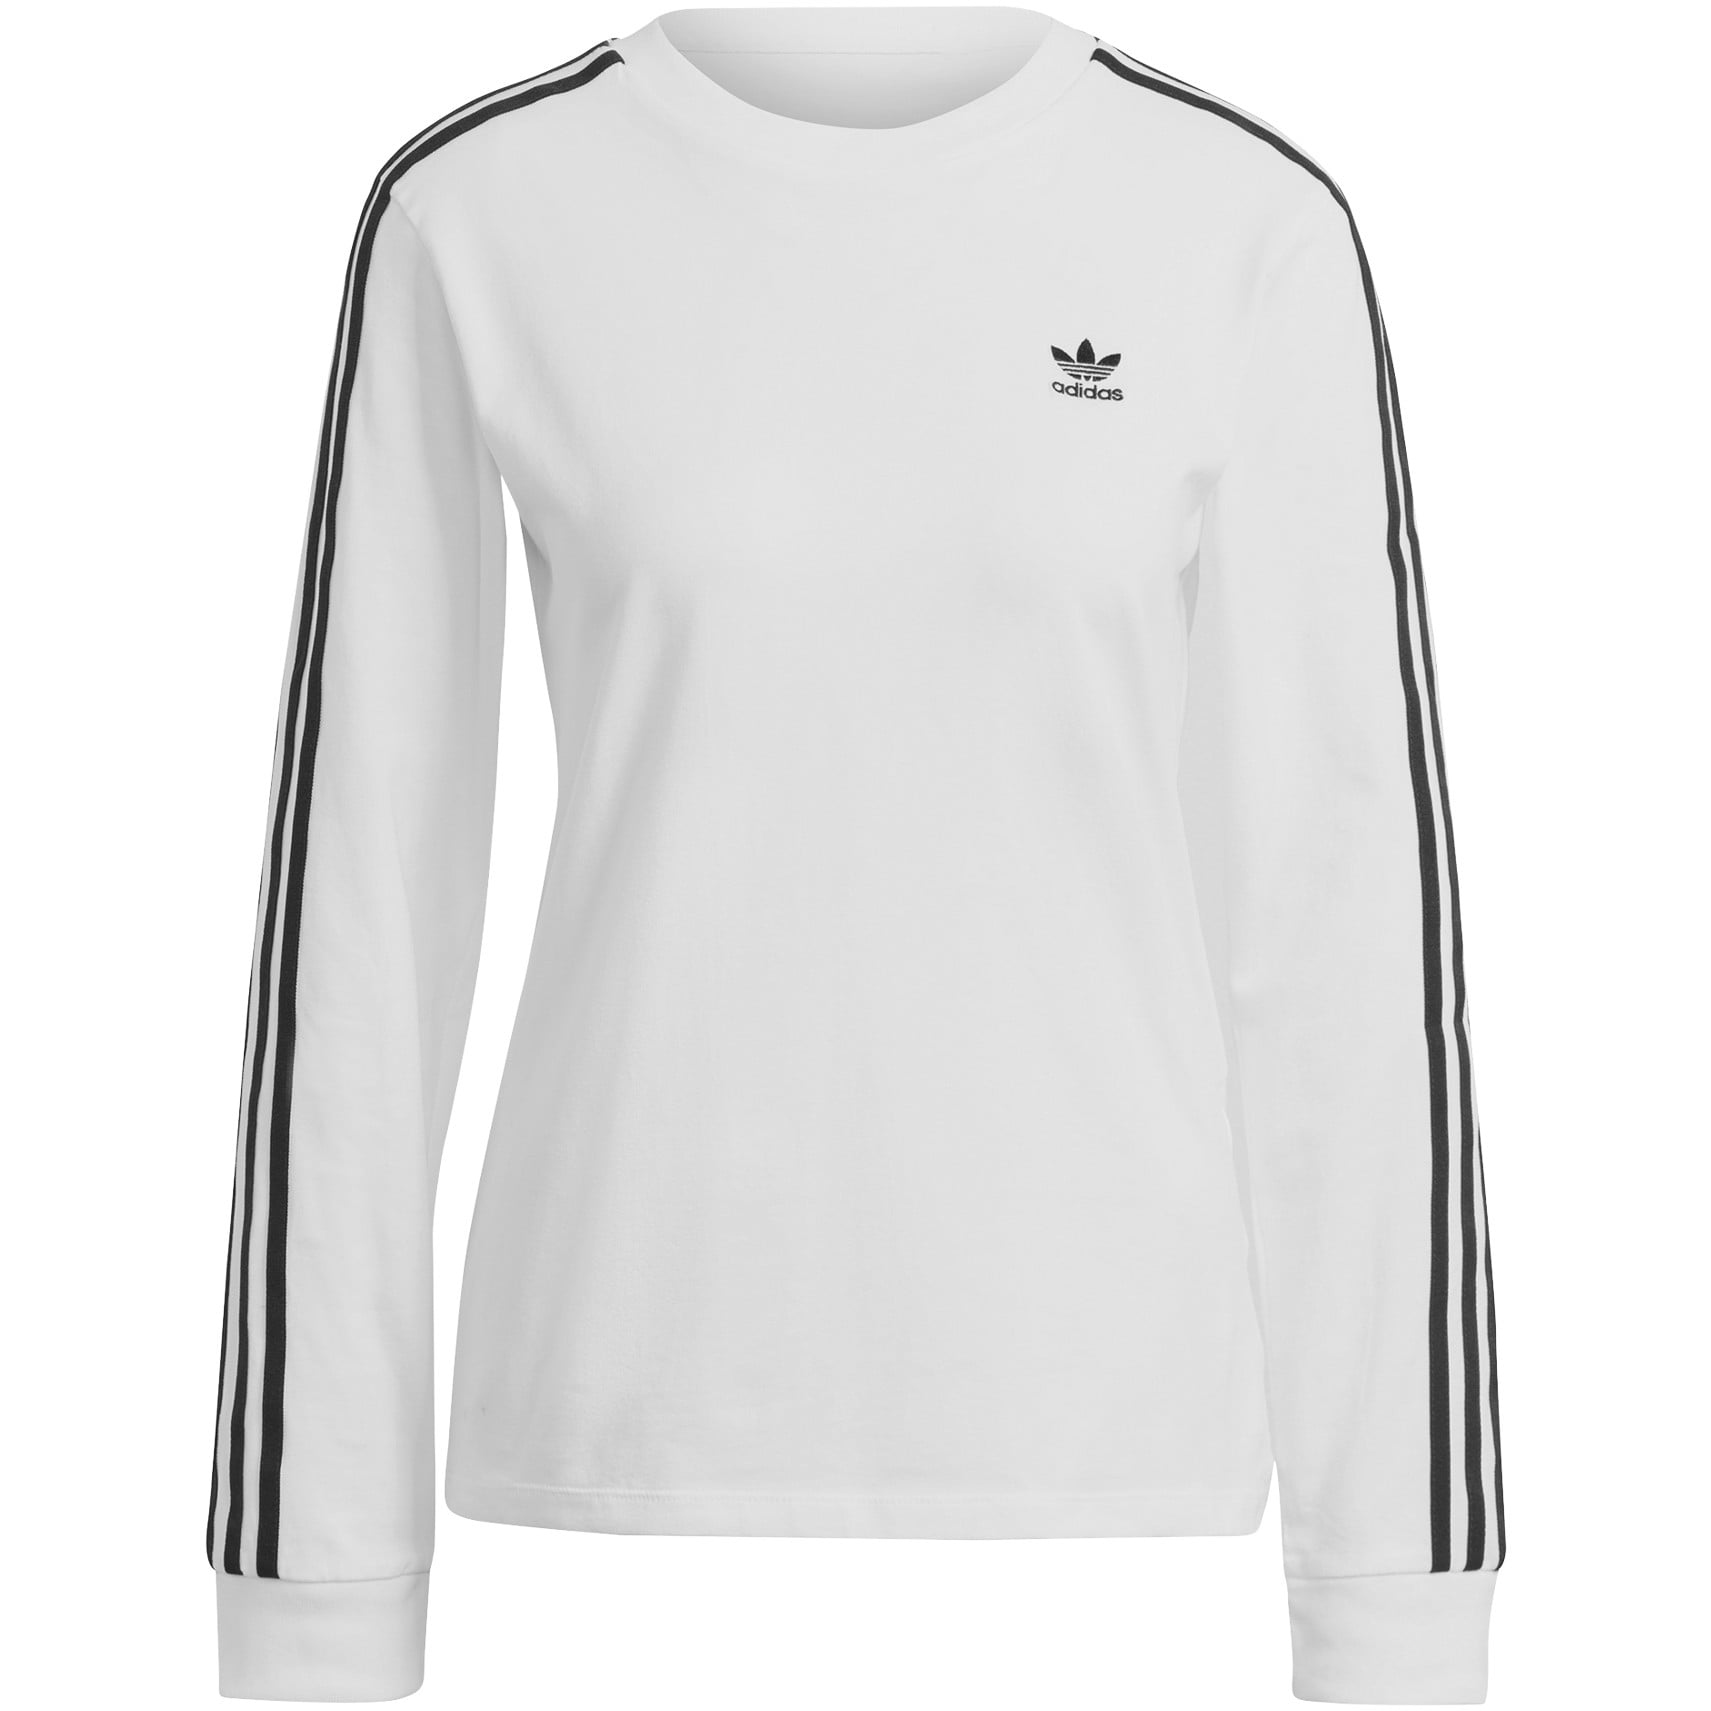 Dámske tričko Longsleeve Adidas ADICOLOR Biele Čierne Logo Pruhy 34/S